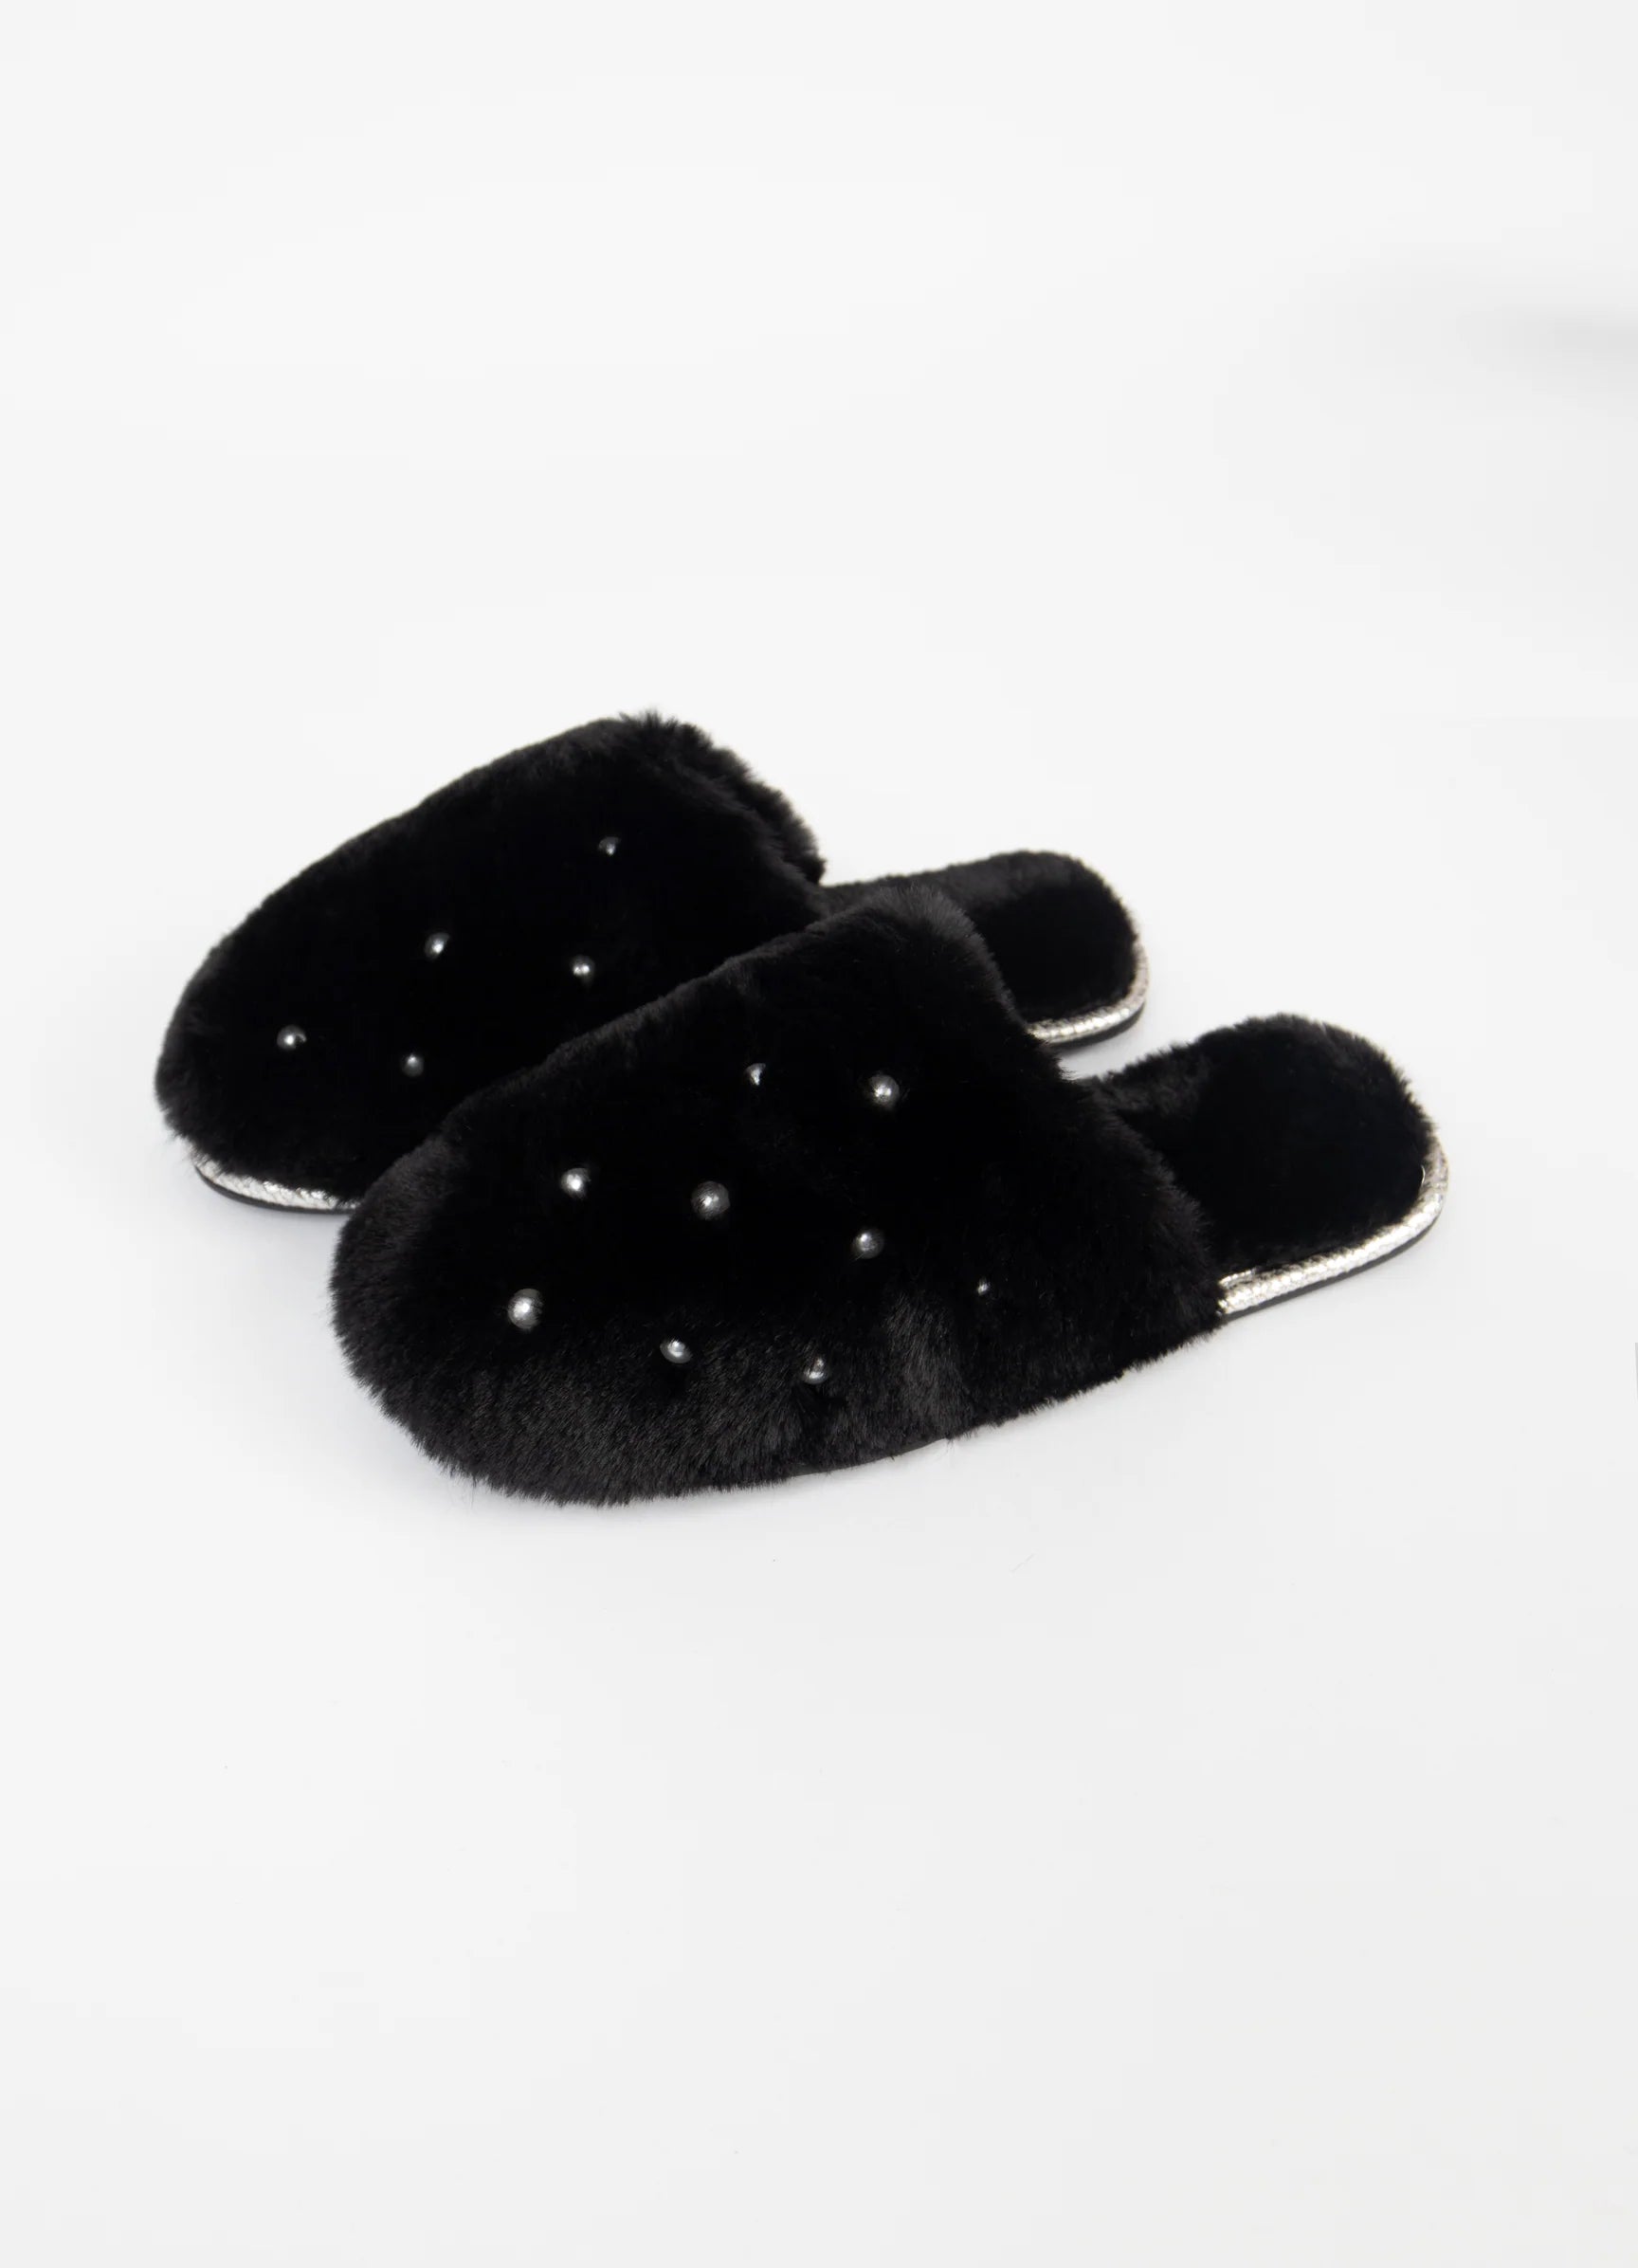 New Fenland Men's Genuine Sheepskin Slippers & Real Fur size uk 9/10 | eBay